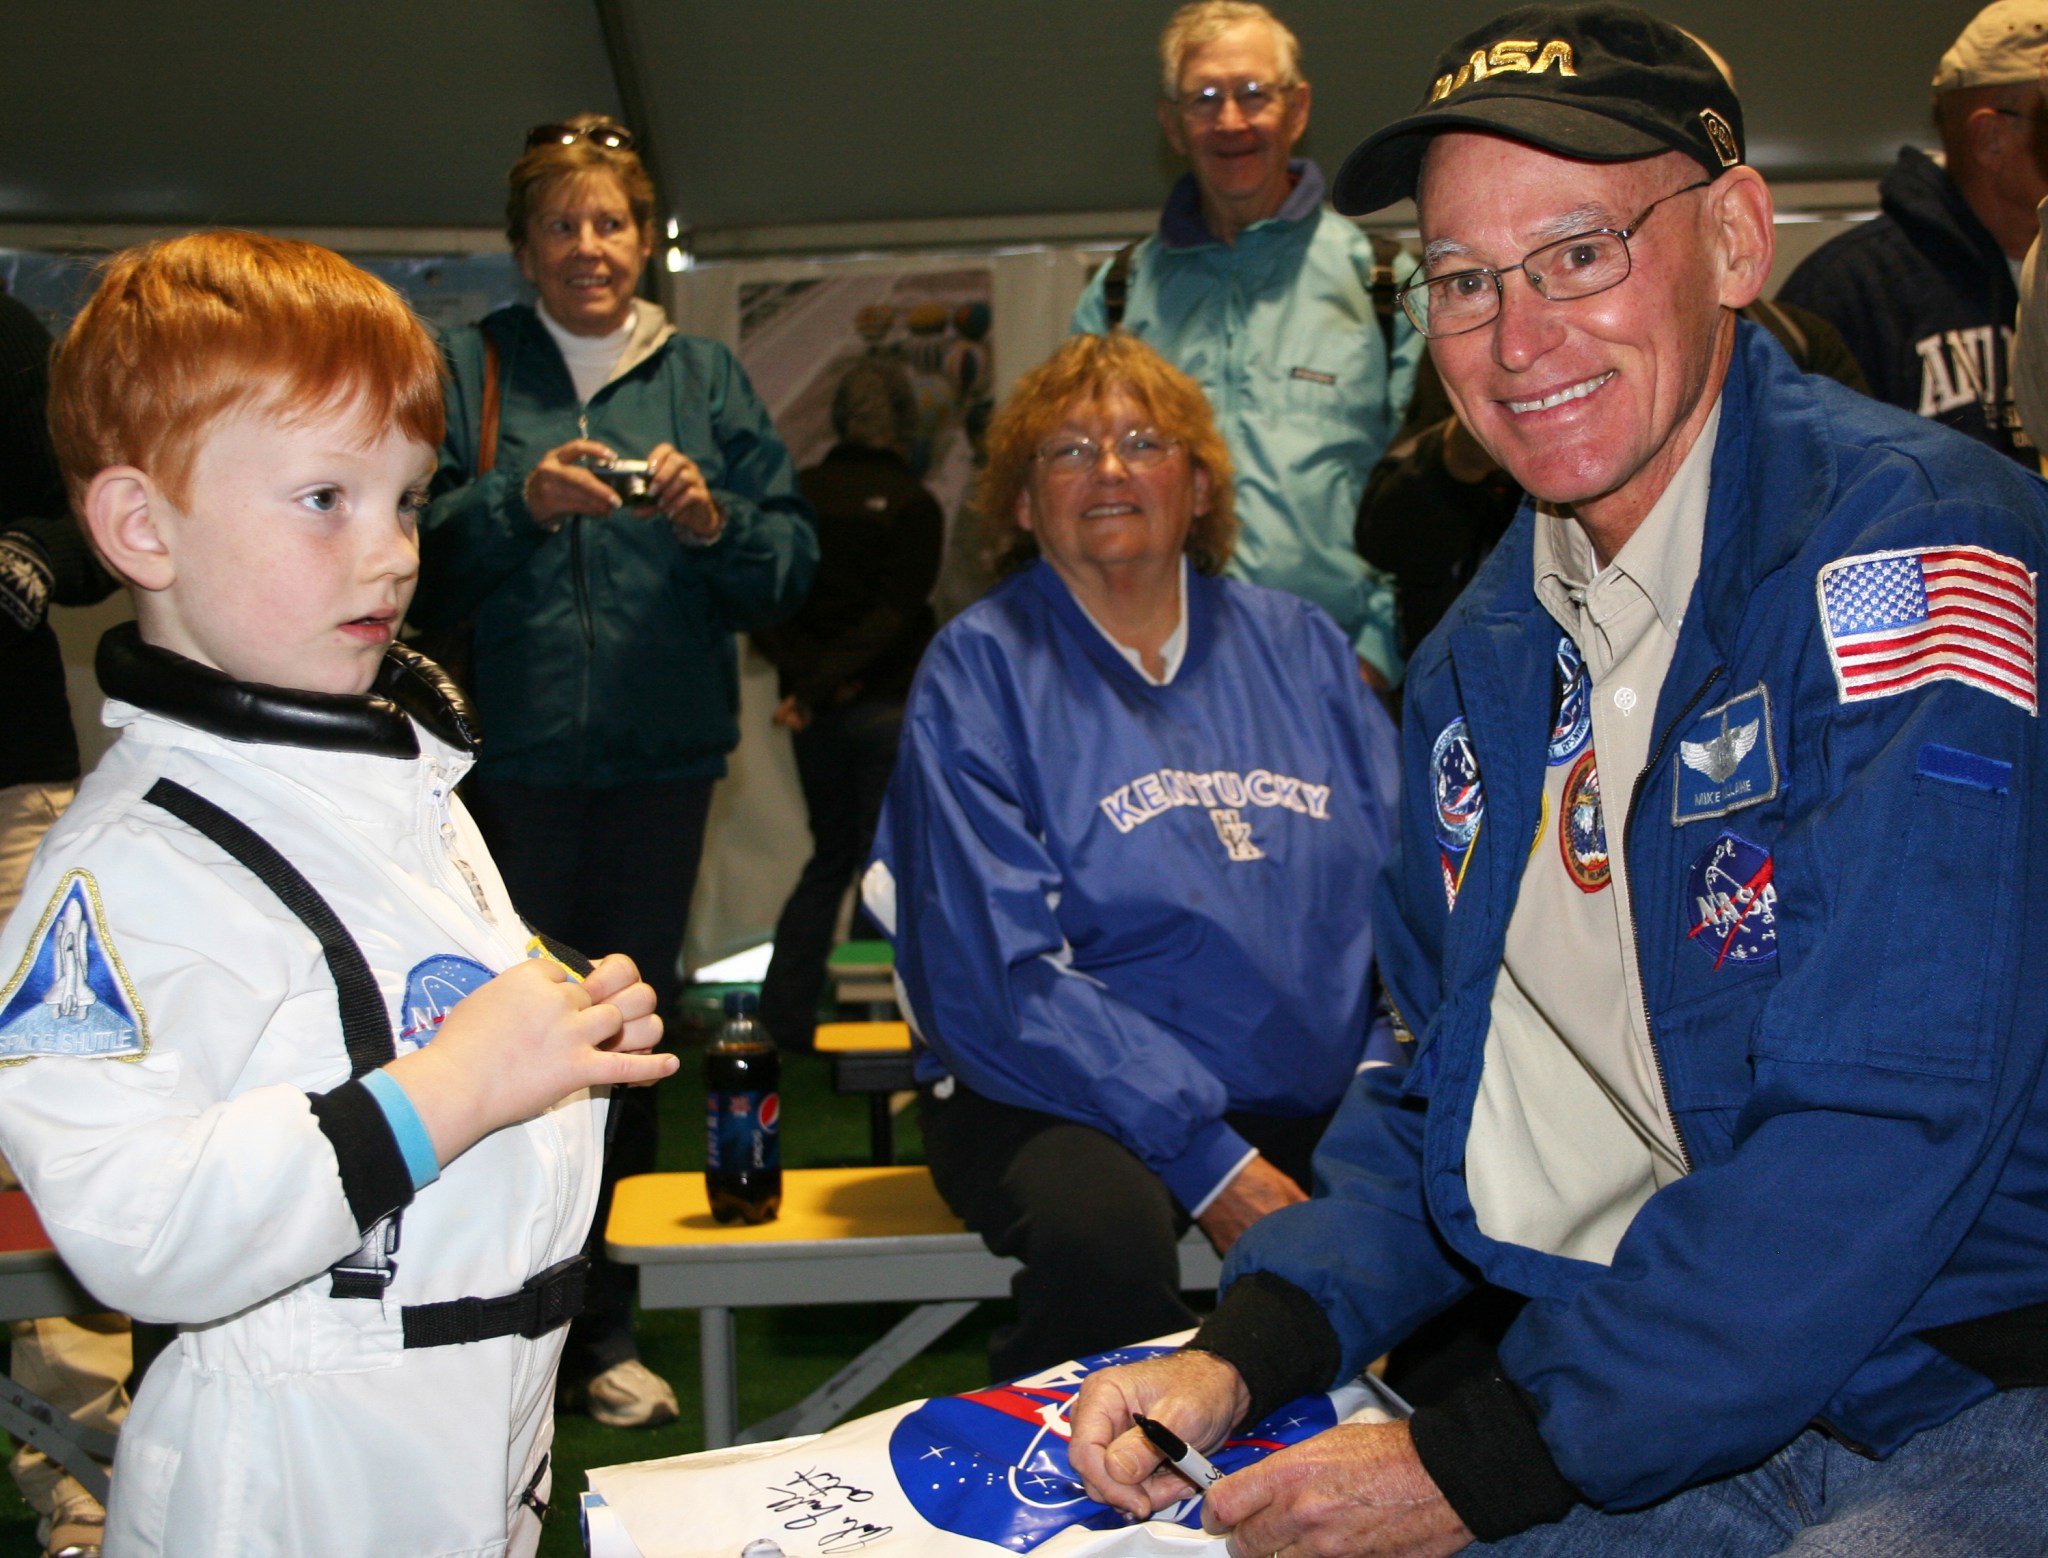 Former NASA astronaut Mike Mullane signs an autograph for aspiring astronaut Seamus Burke.